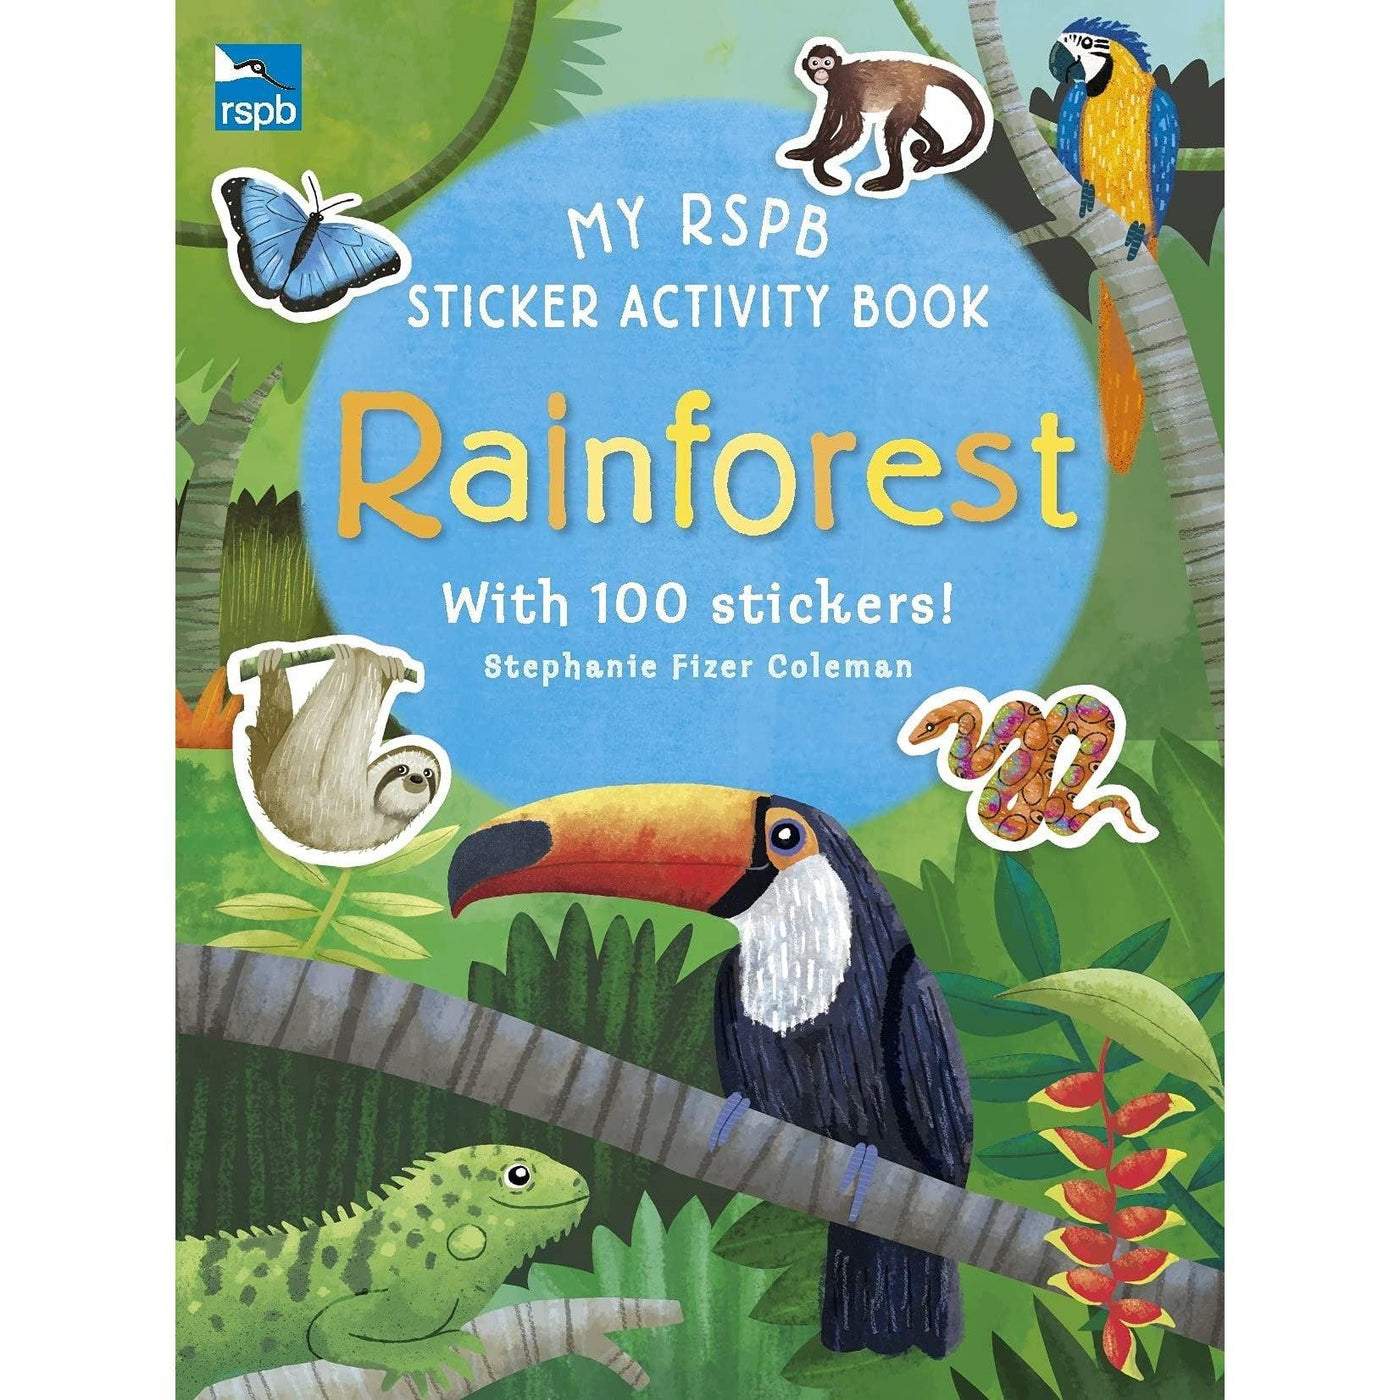 My RSPB Sticker Activity Book: Rainforest